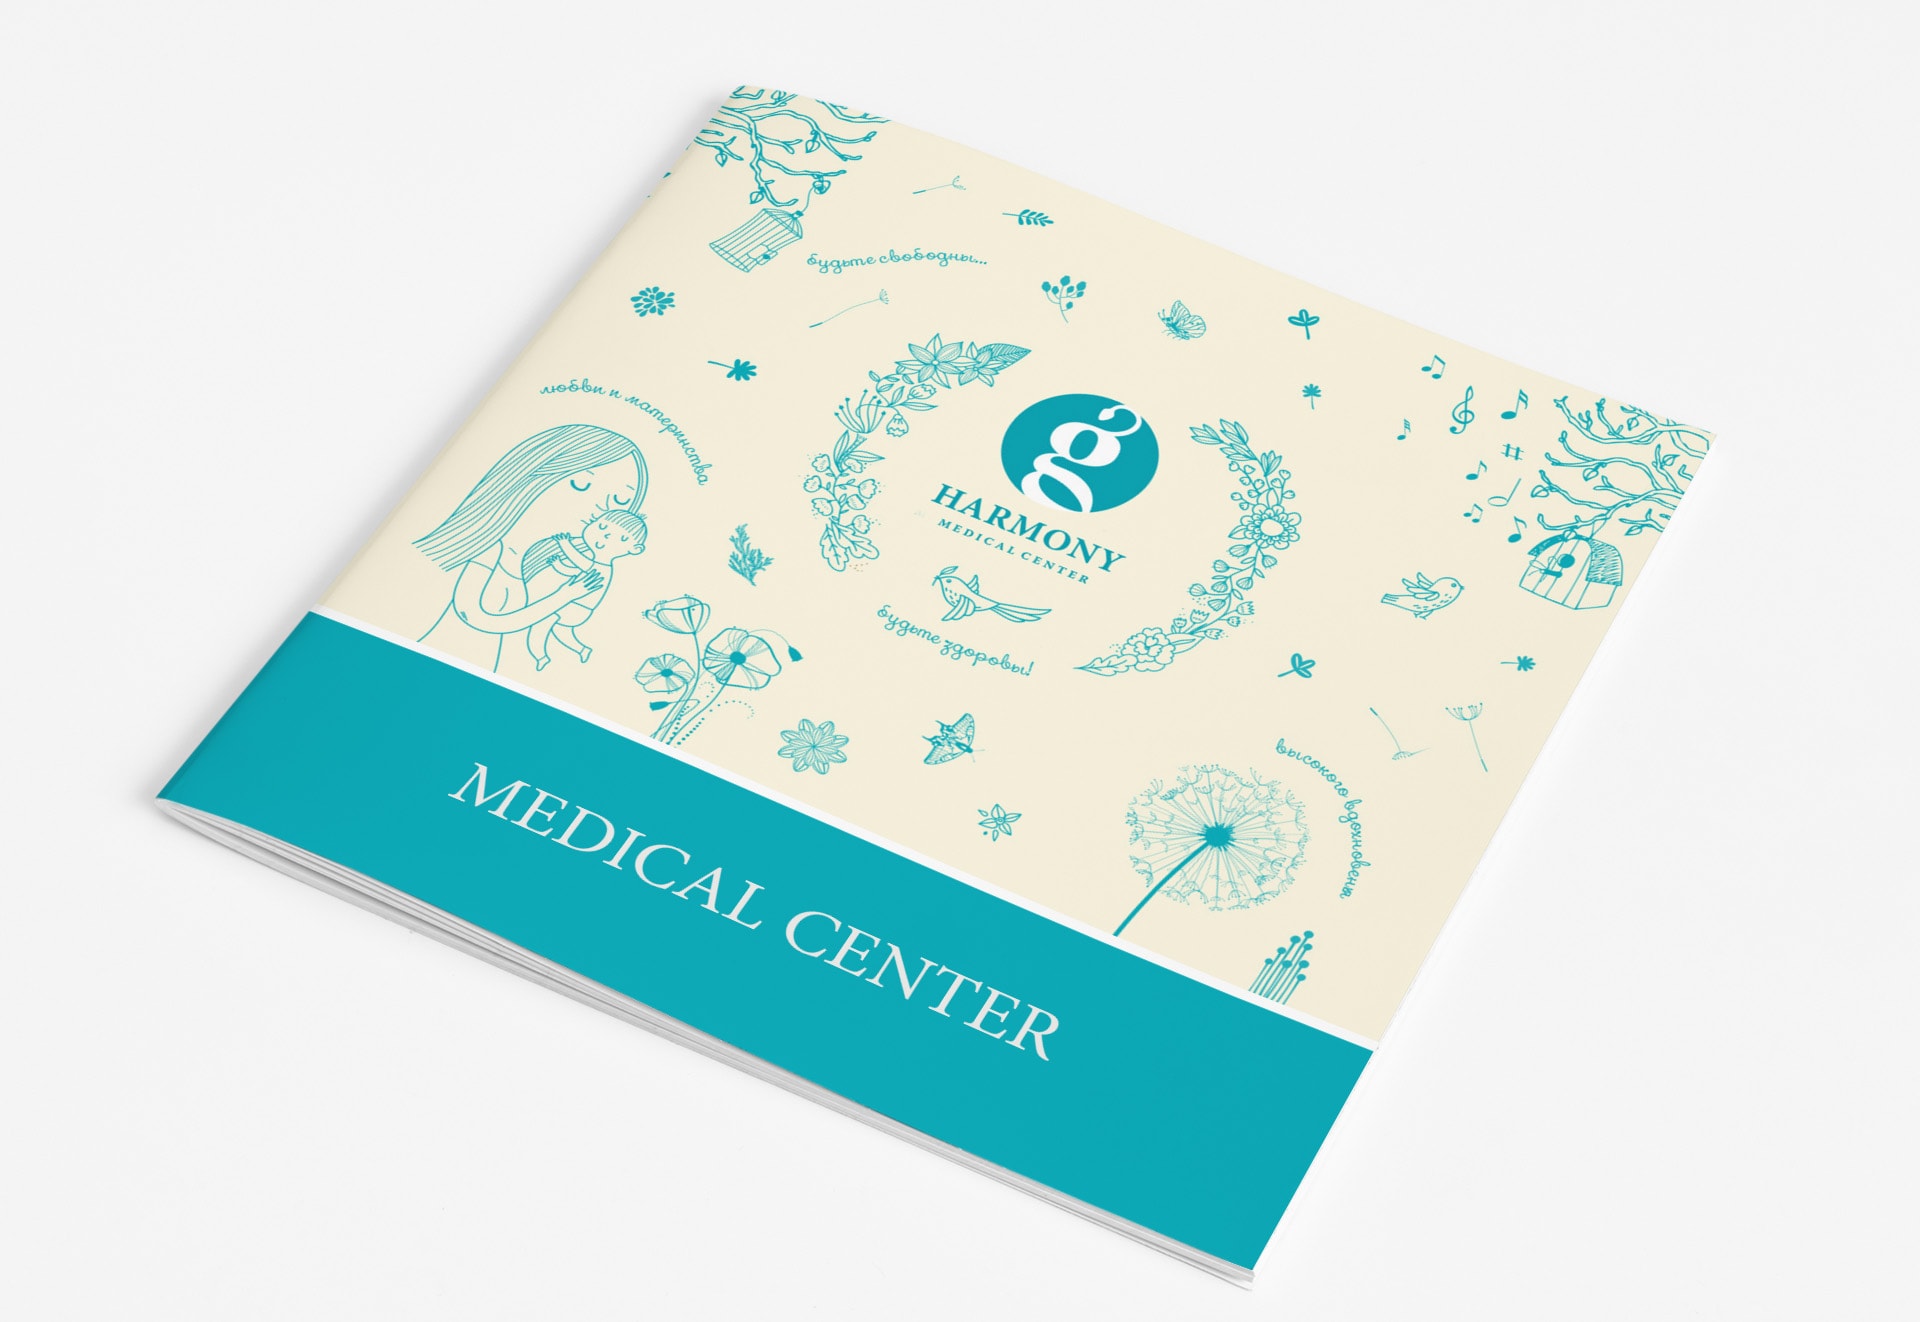 оформление дизайн обложки каталога медицинского